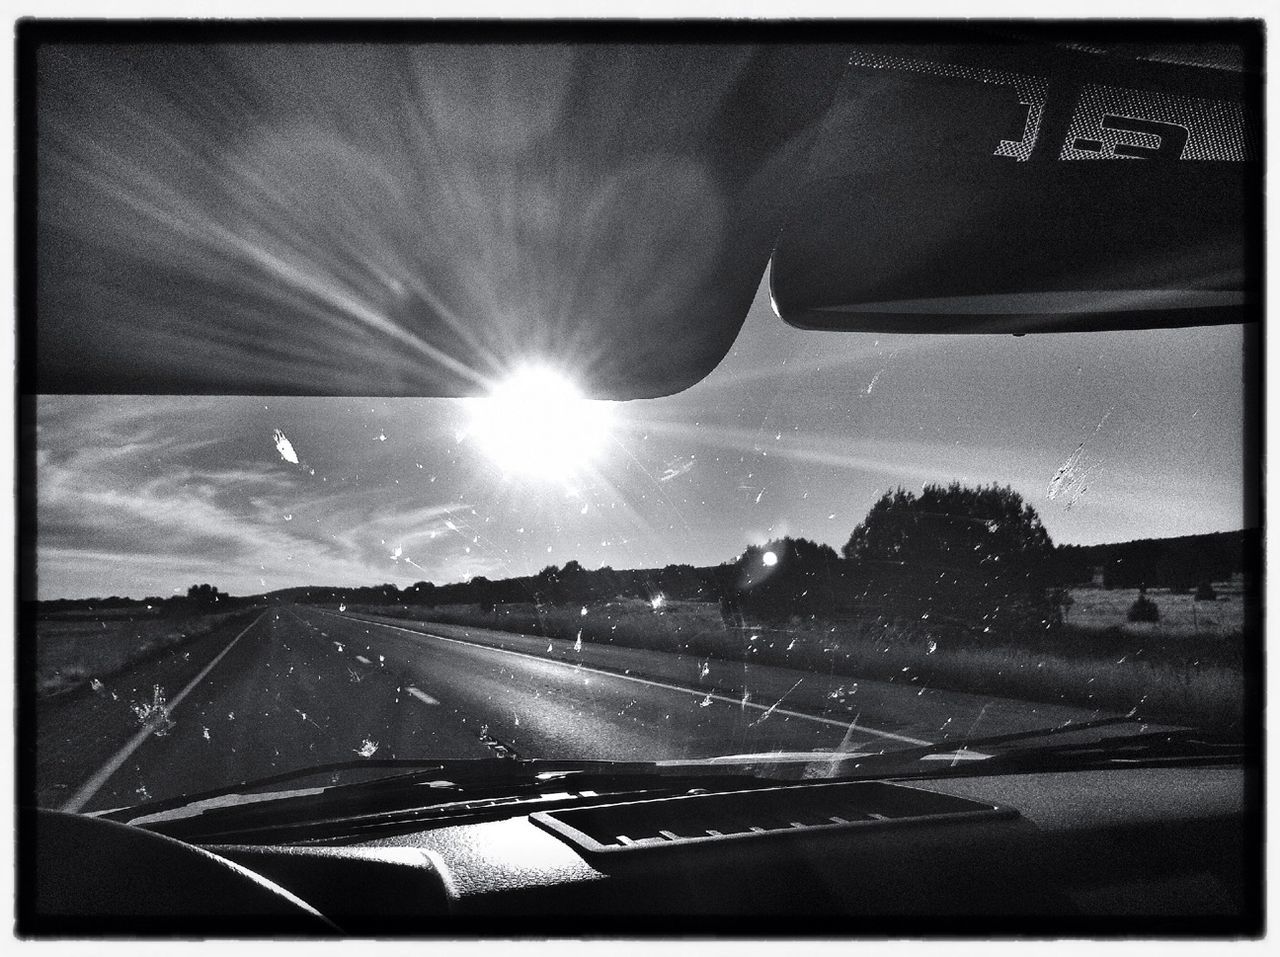 Sun seen through car windshield